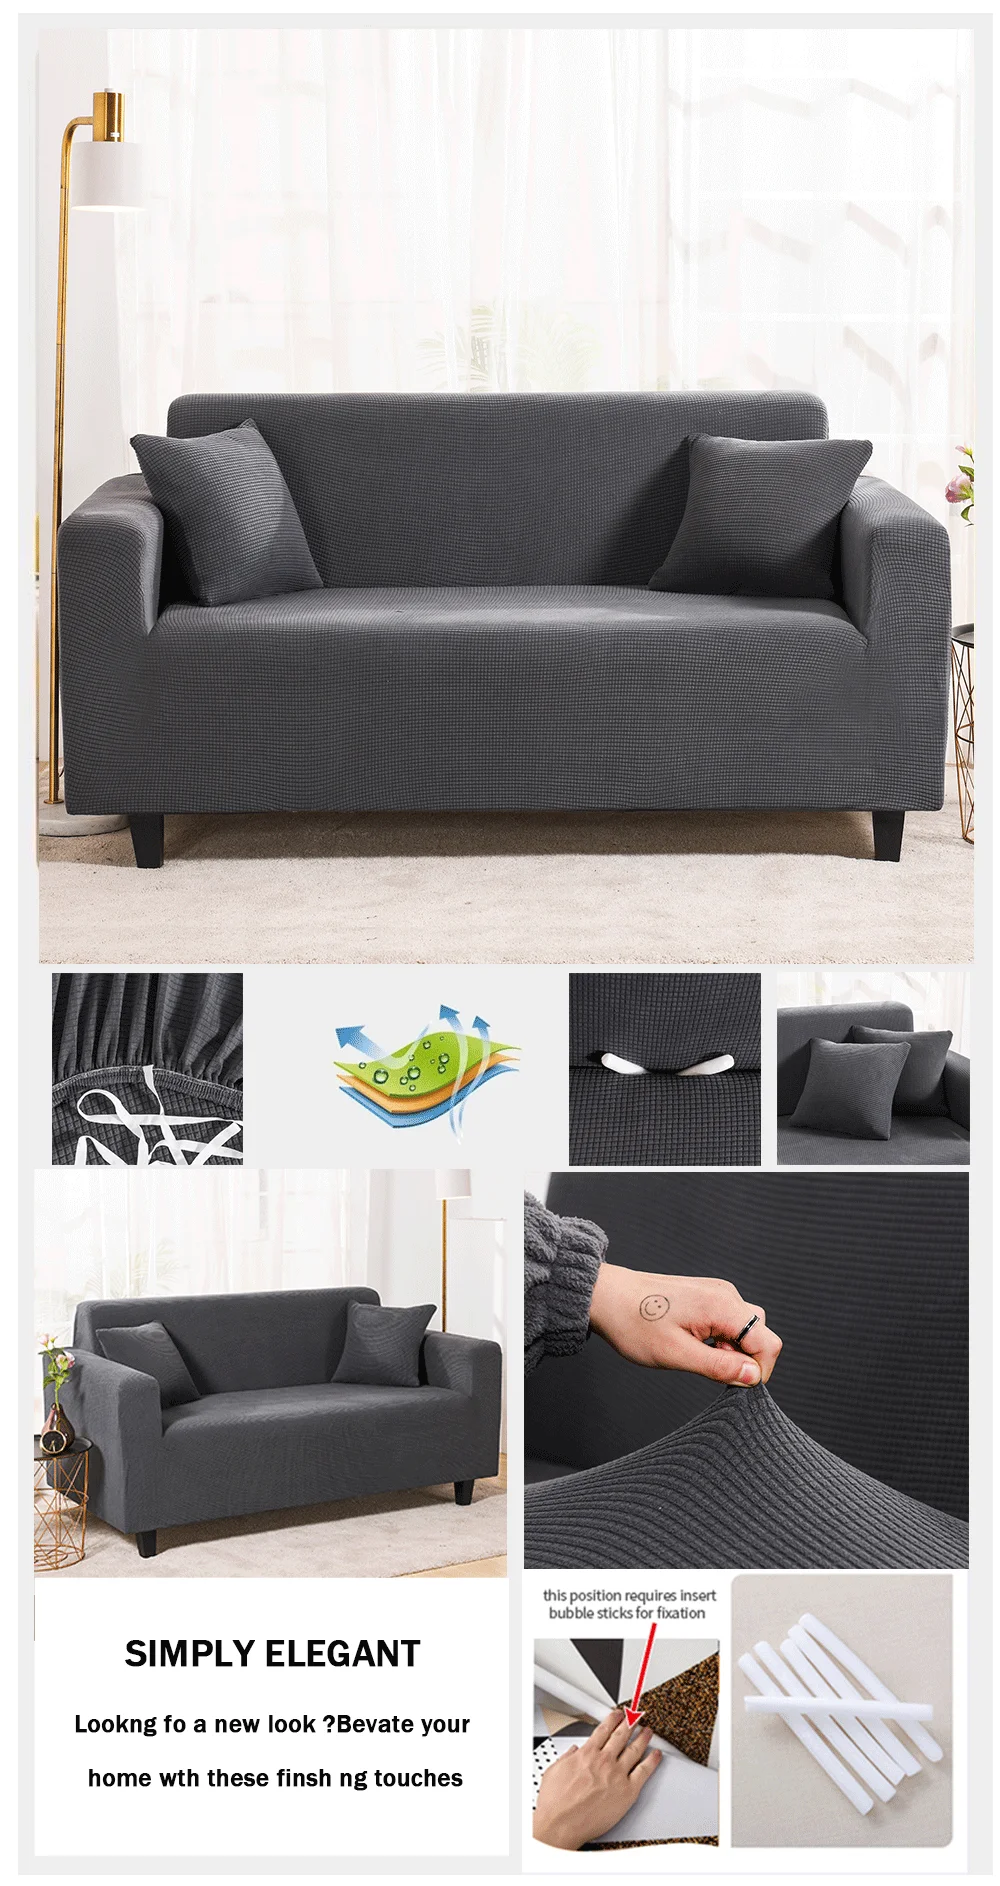 funda sofas ajustables Jacquard impermeable funda de sofa ajustable, funda  sofa chaise lounge, fundas de sofas elasticas ajustables, fundas sofas  elasticas adaptables - AliExpress